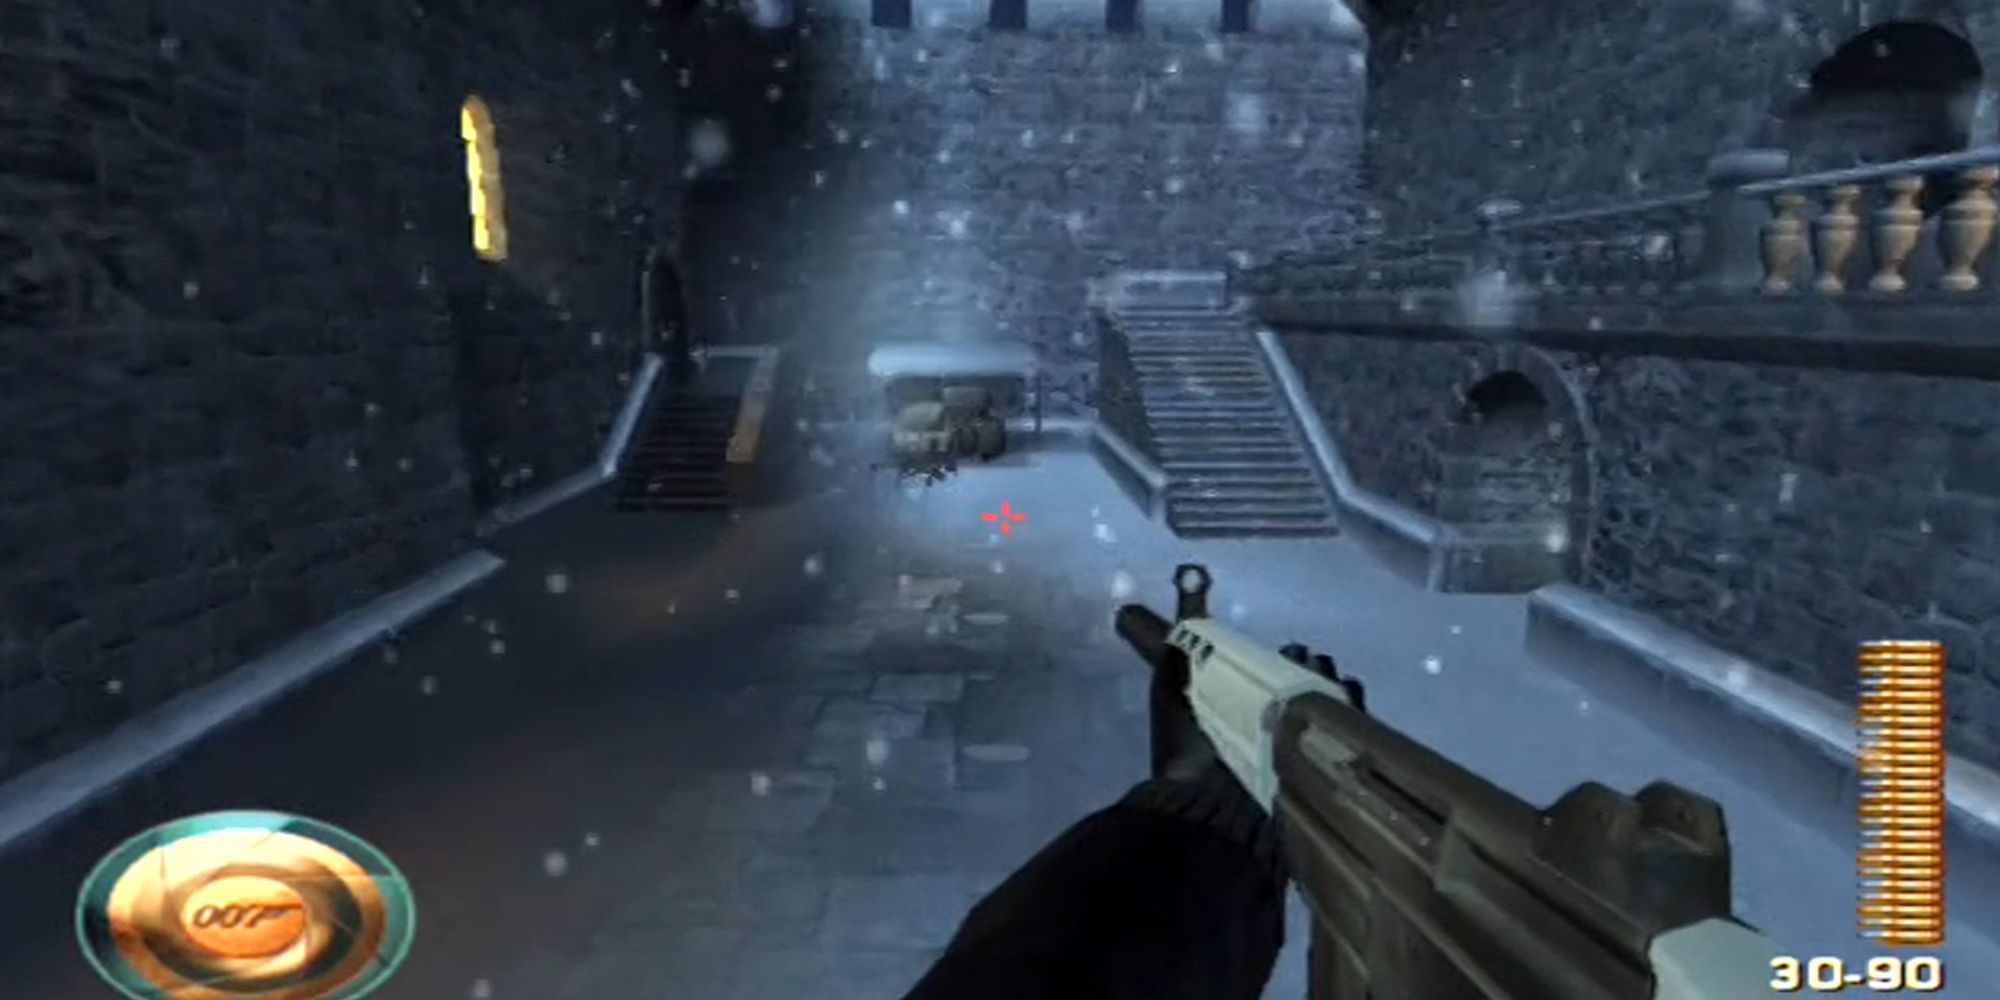 007 Nightfire Screenshot Of Assault Rifle